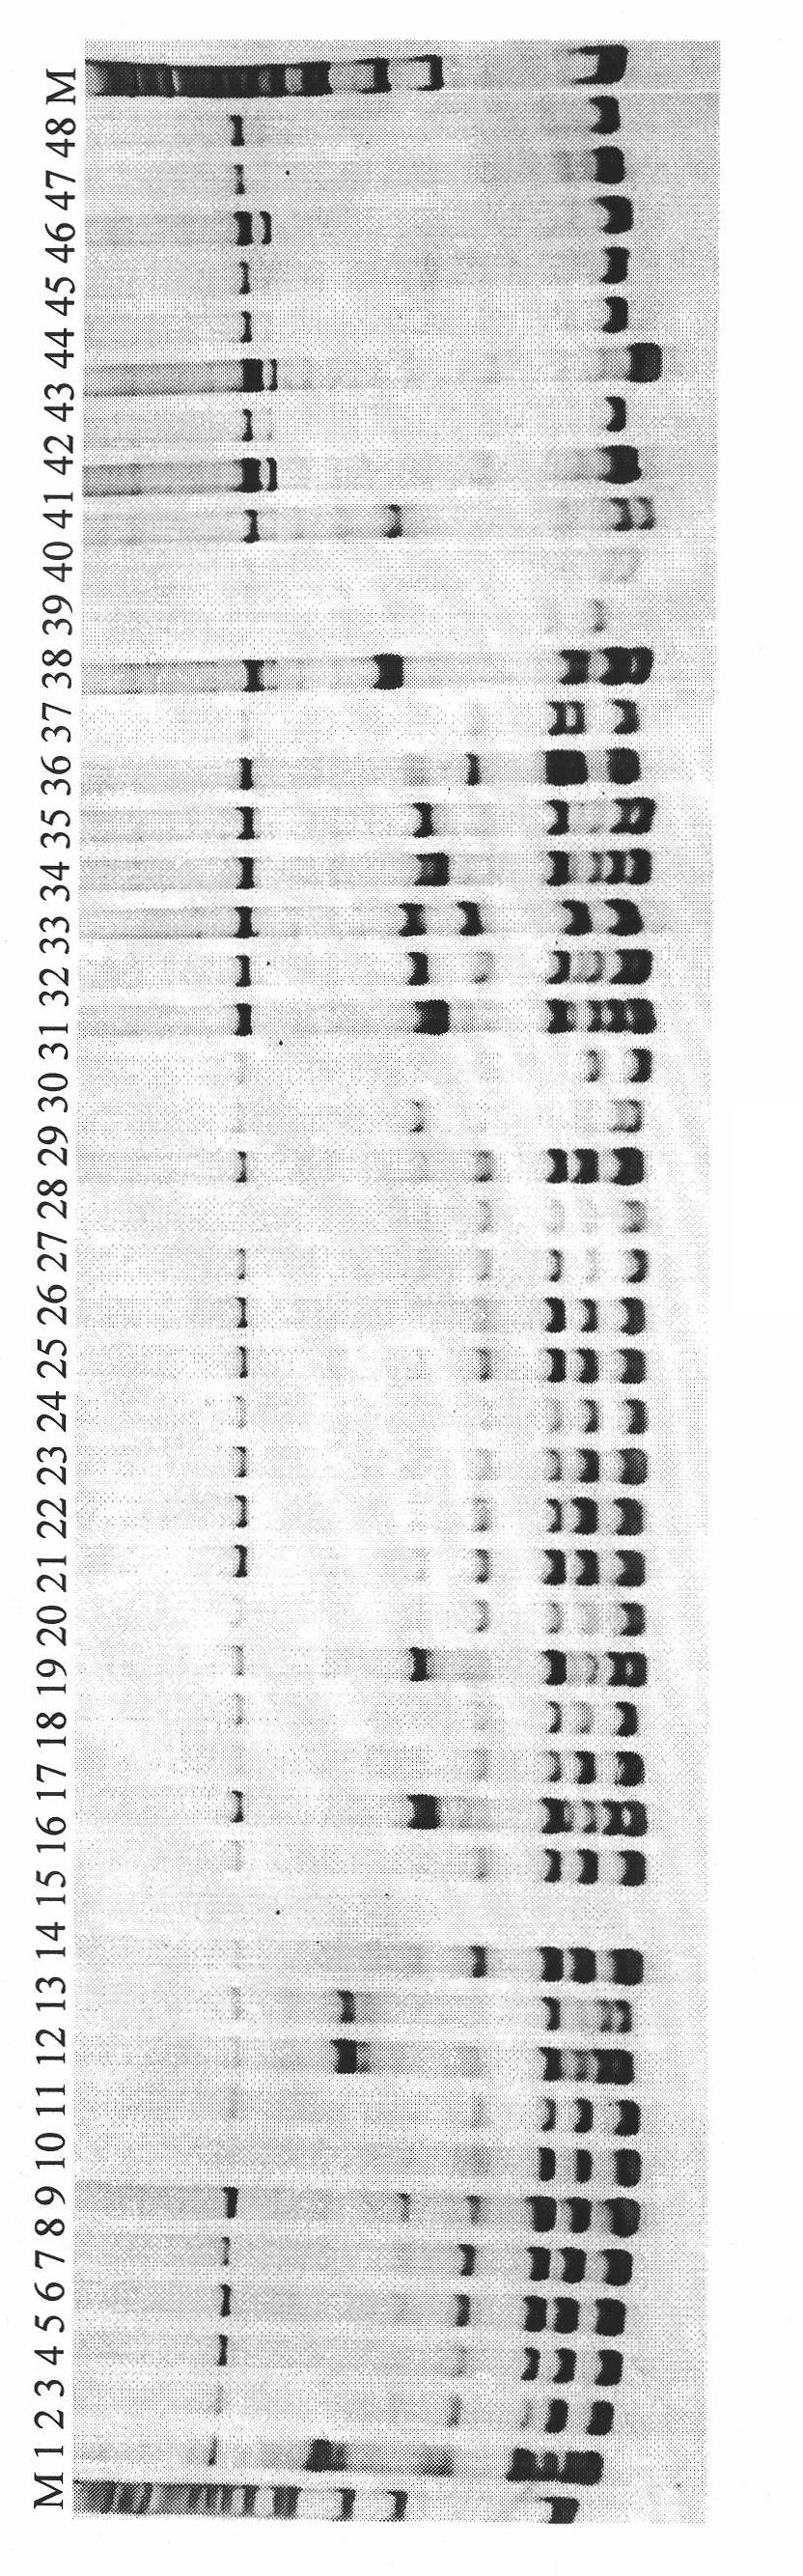 Amygdalus communis EST (expressed sequence tag) microsatellite marker screening method